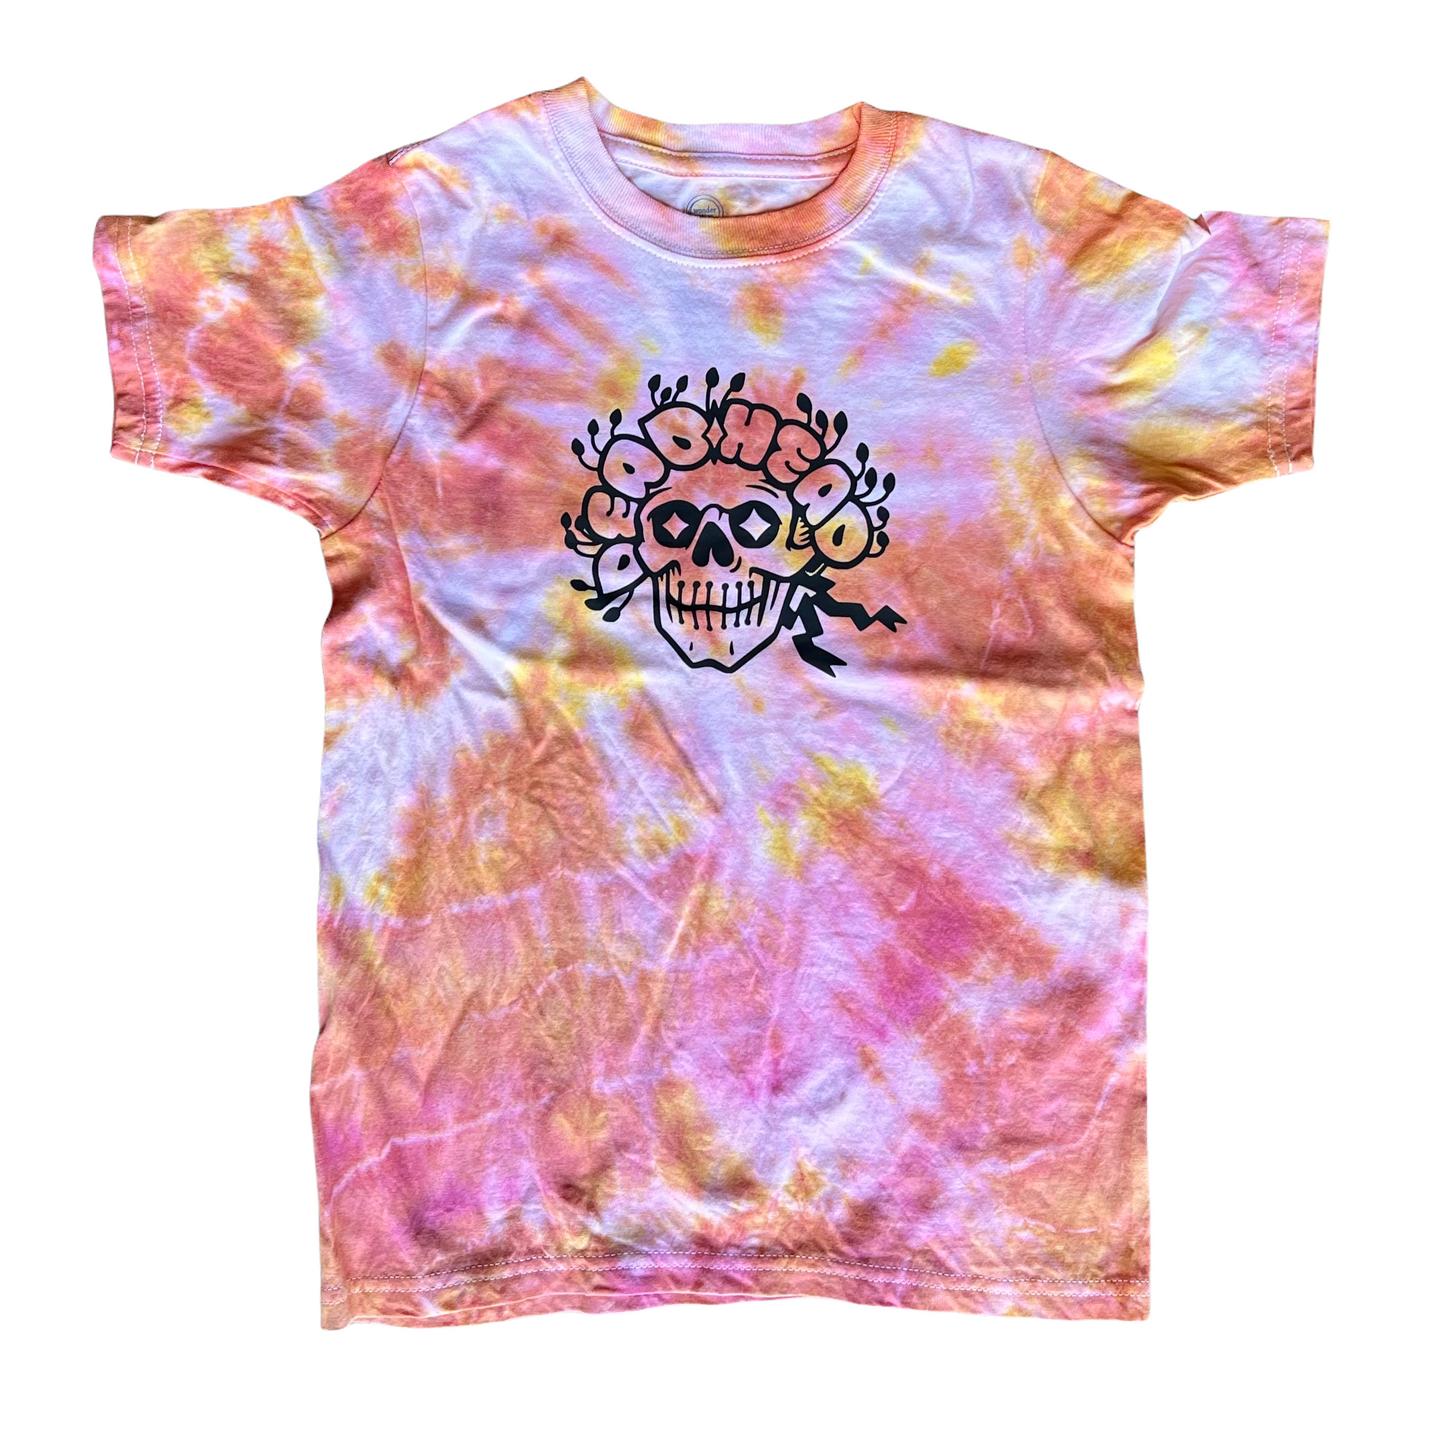 Medium size 8 kids dye shirt - dead head